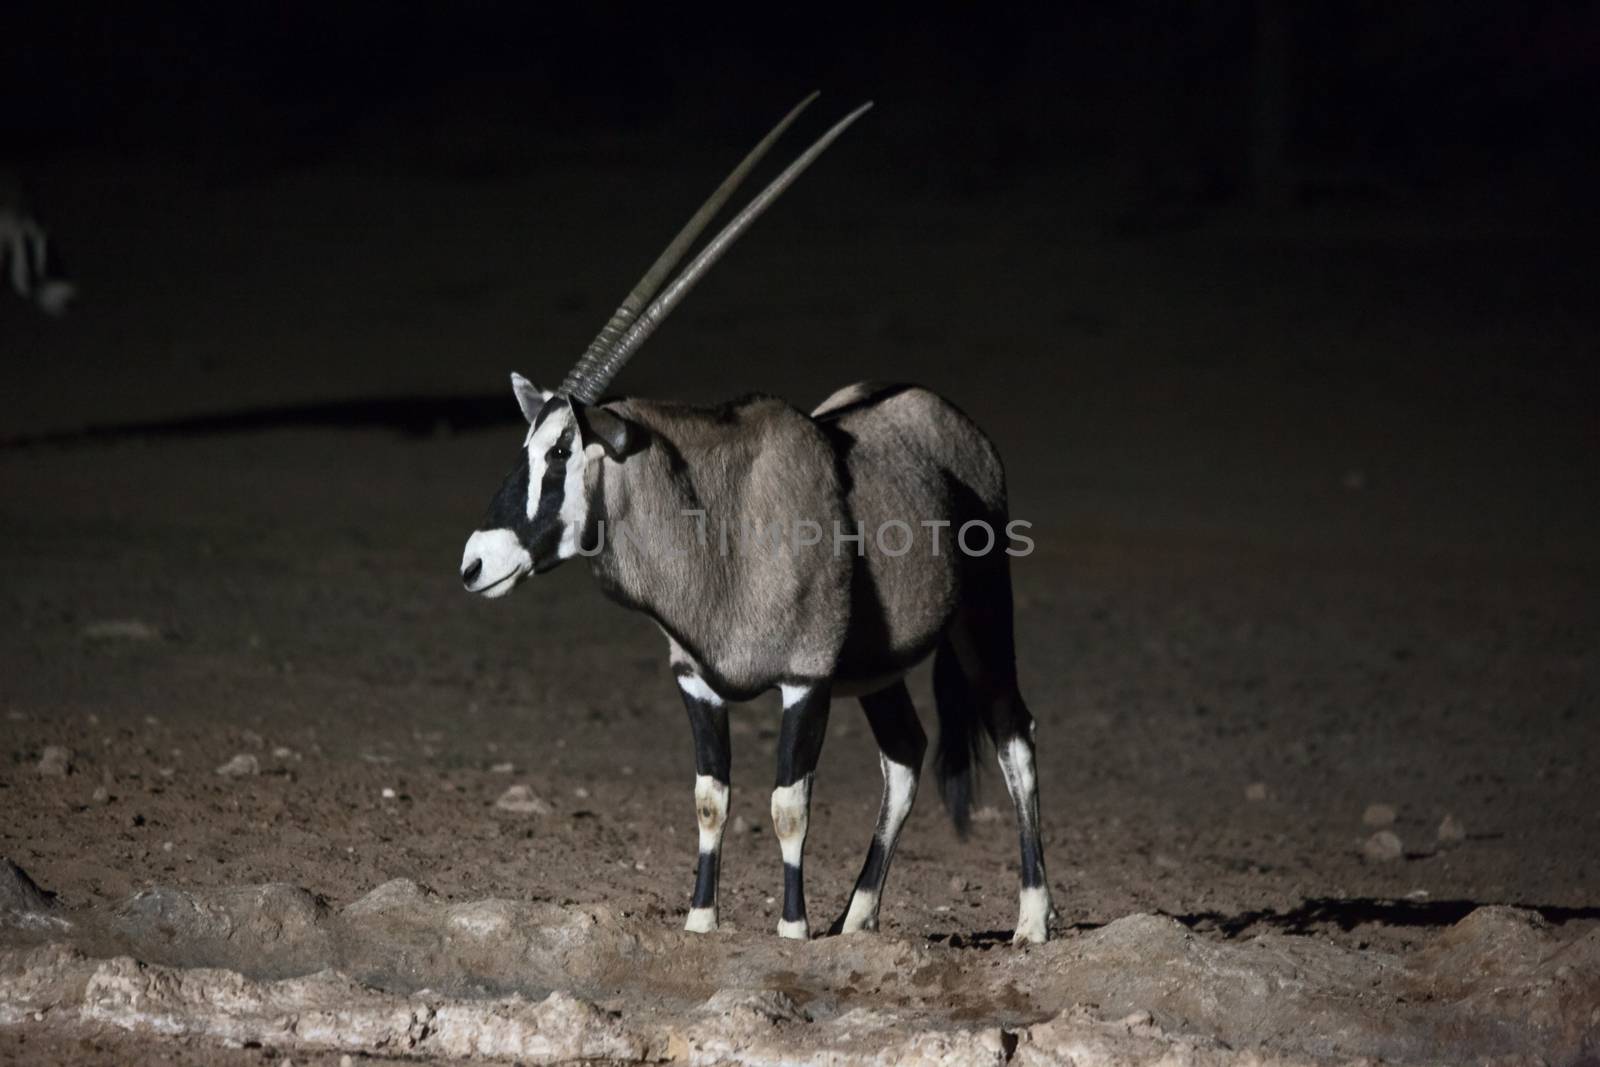 Oryx at night 3 by kobus_peche